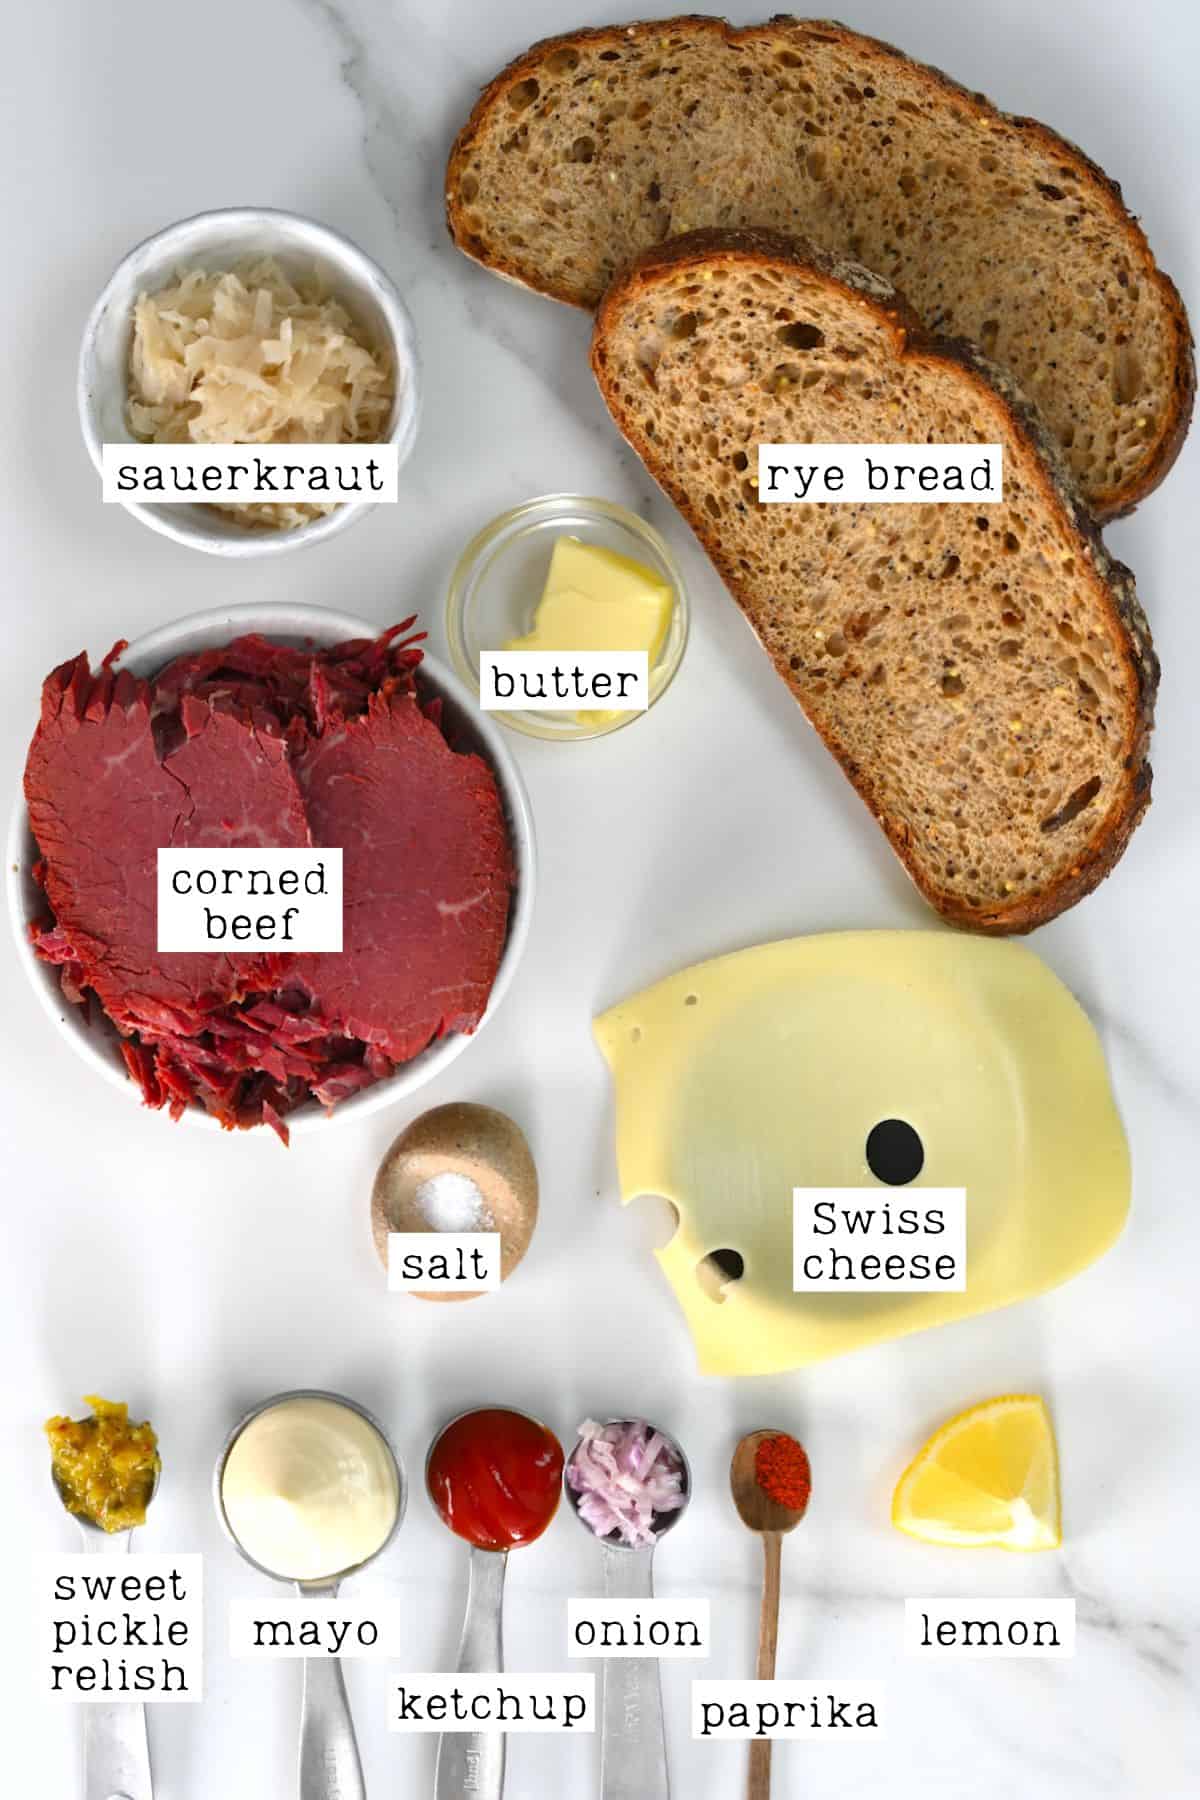 Ingredients for Reuben sandwich